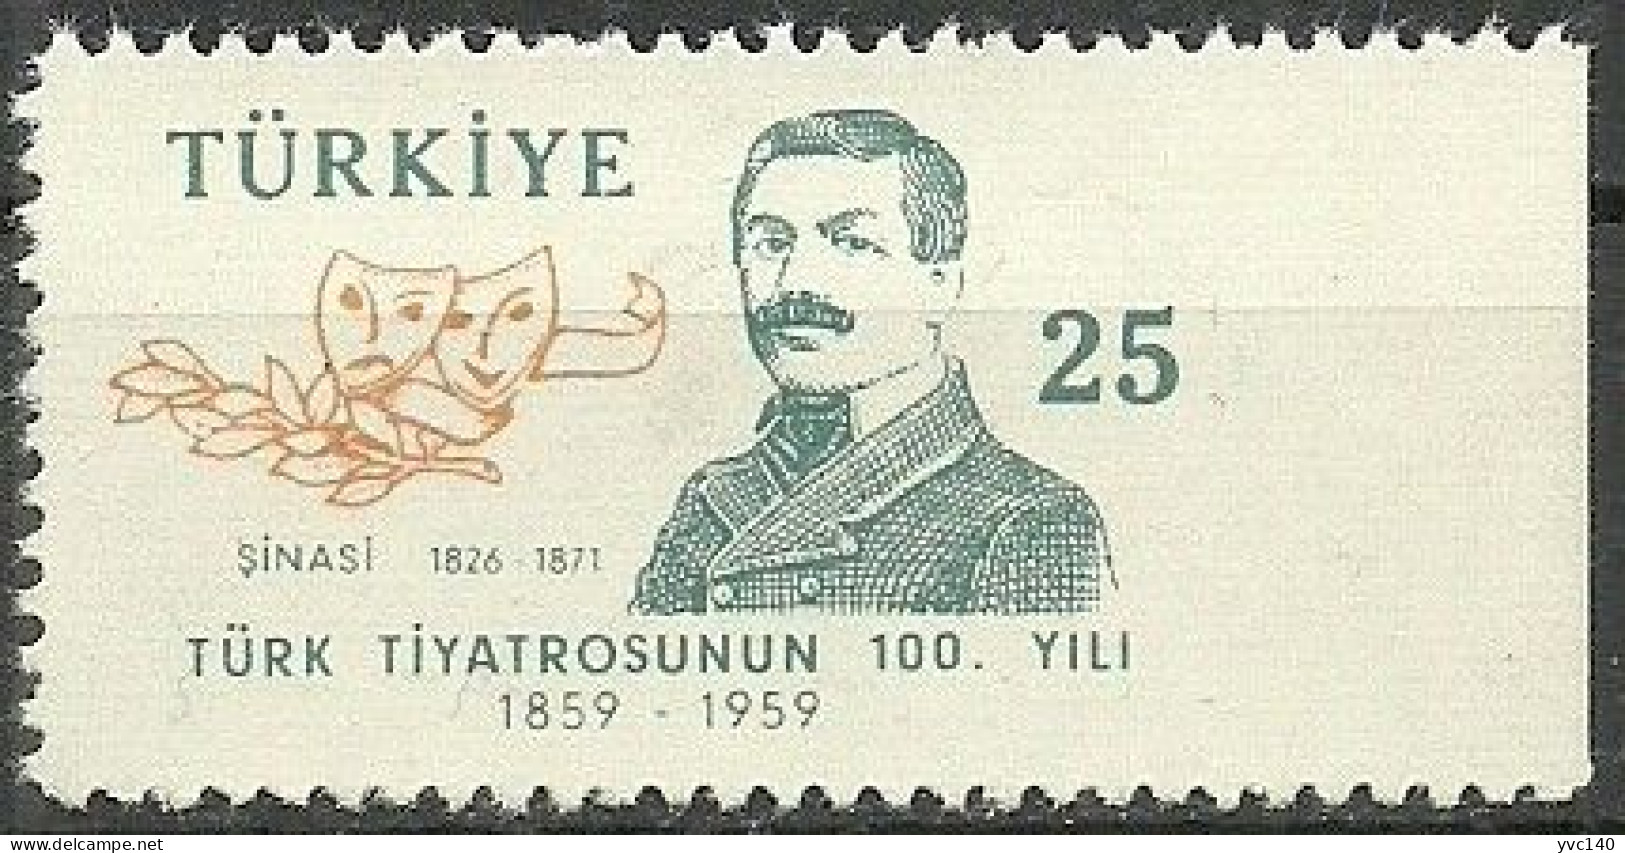 Turkey; 1959 100th Anniv. Of The Turkish Theater 25 K. ERROR "Imperf. Edge" - Unused Stamps